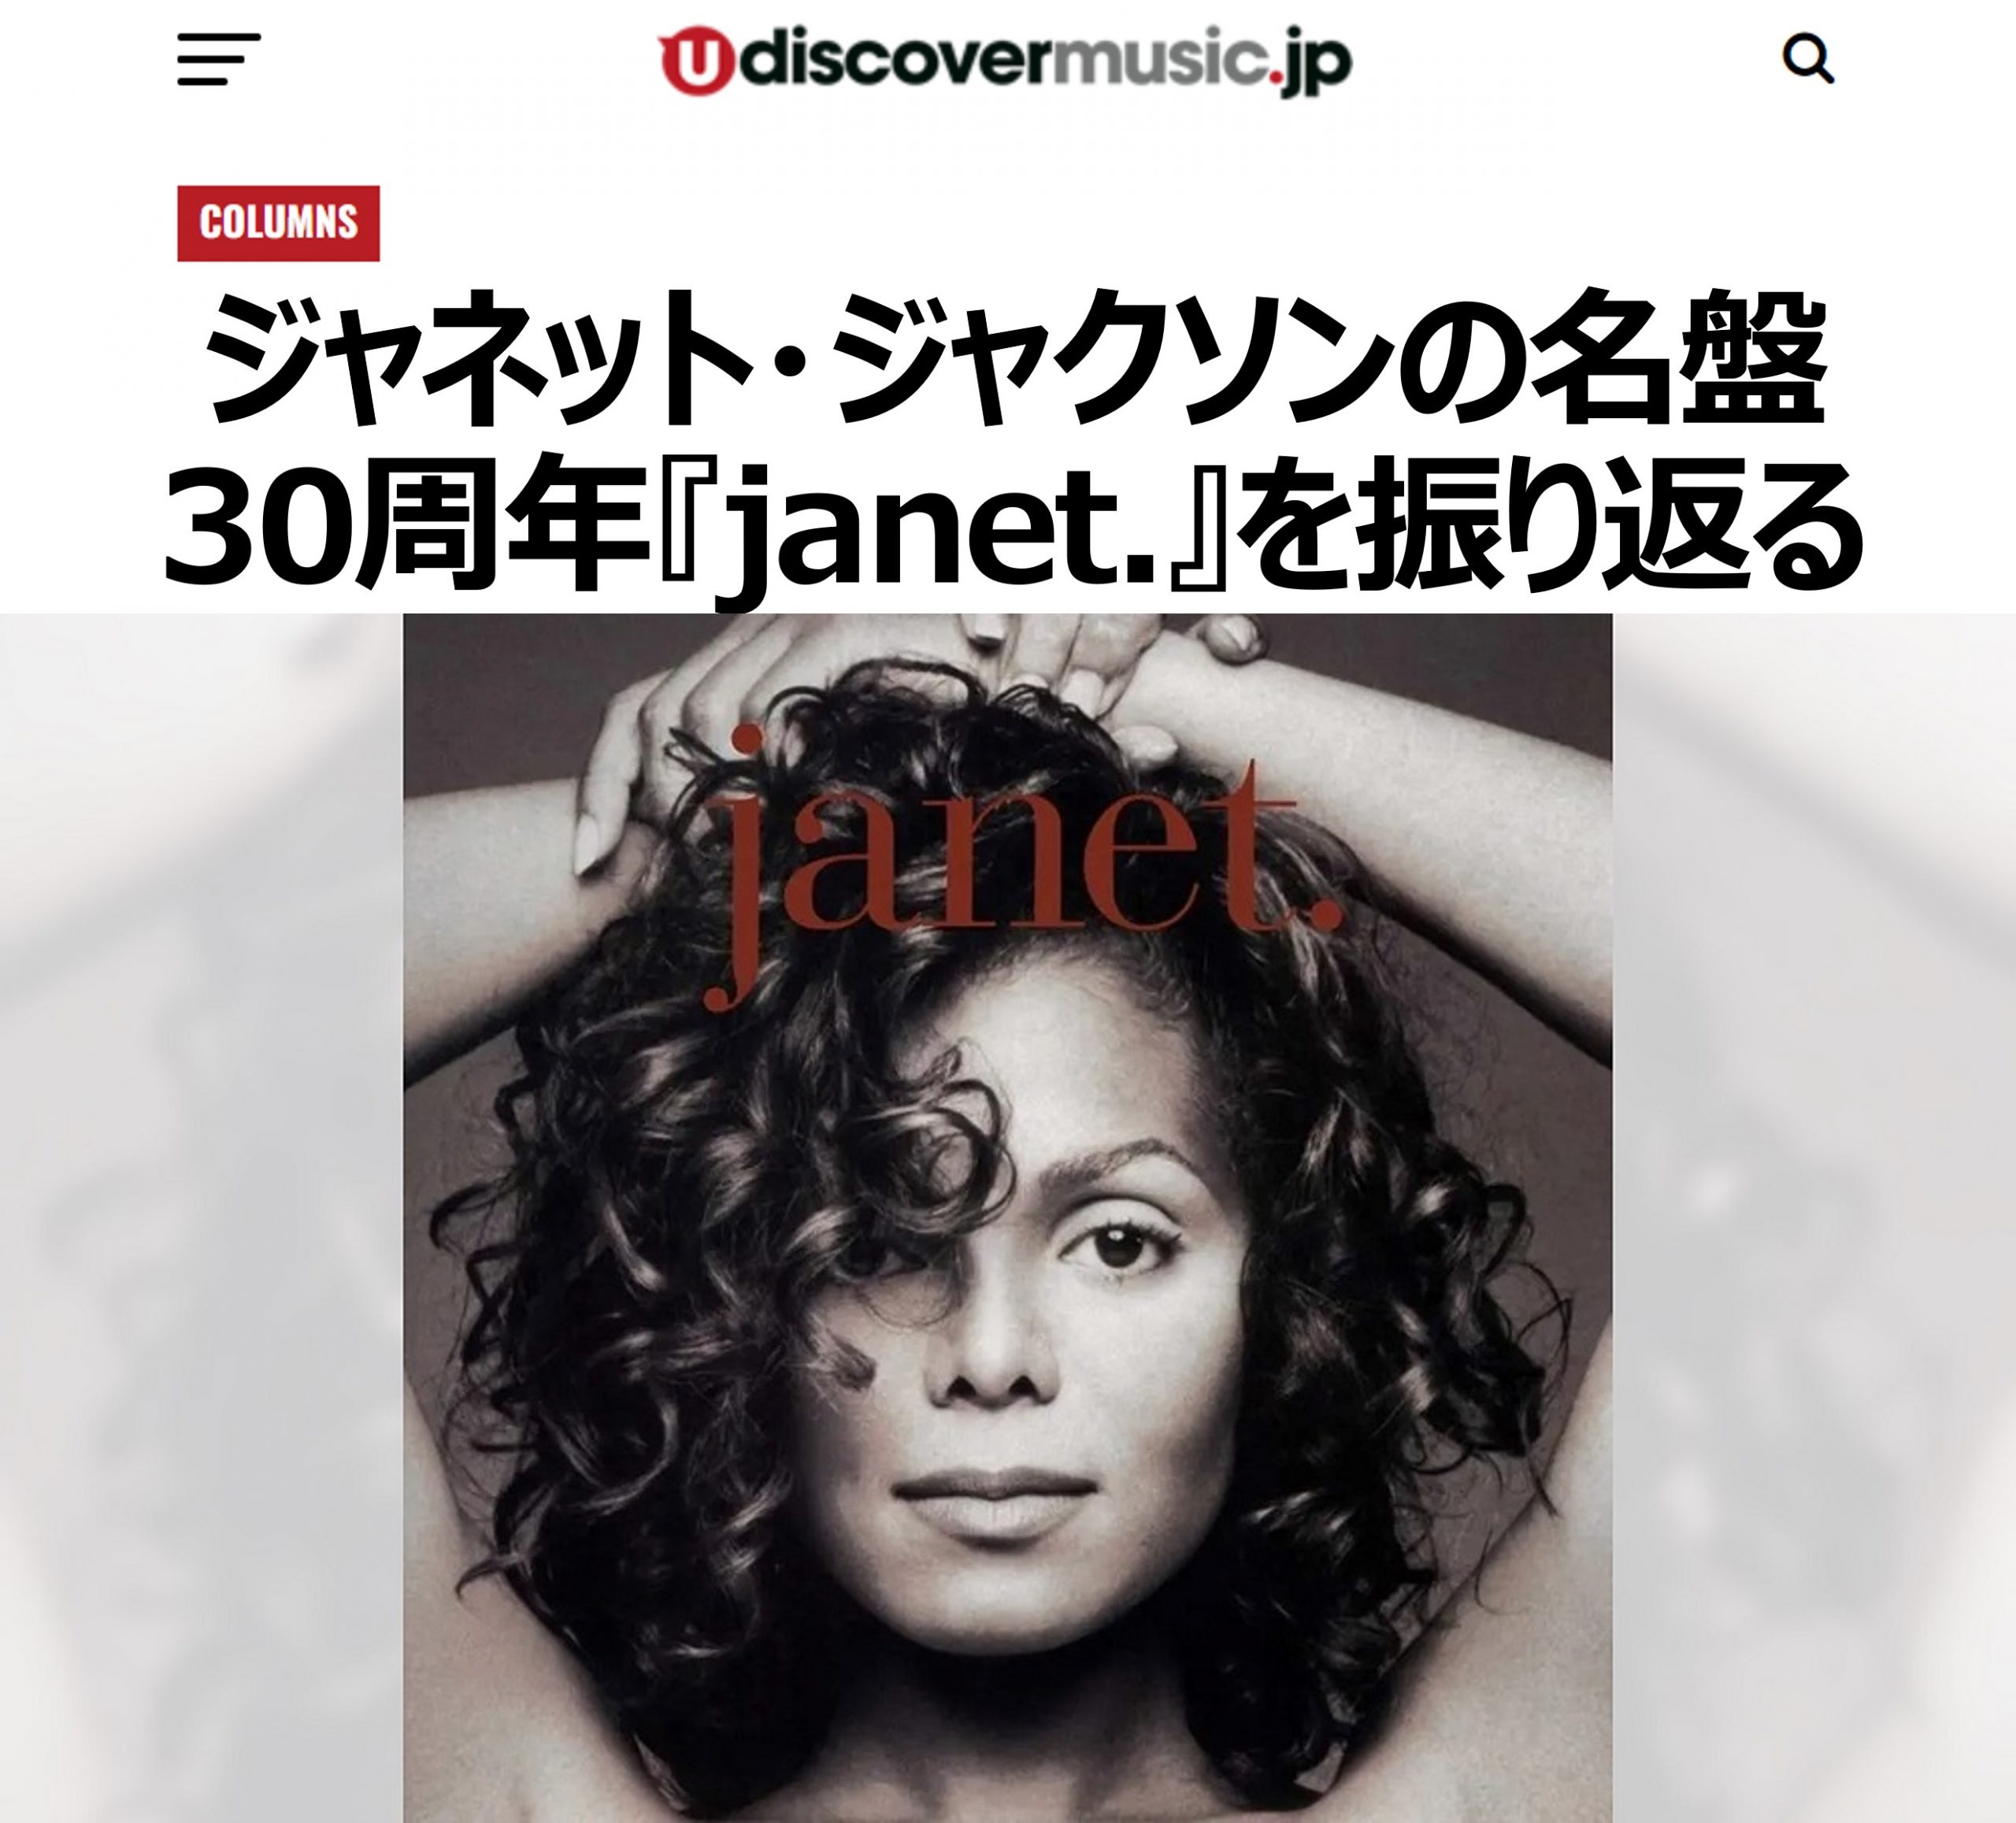 【uDiscovermusic掲載】30周年盤が発売となる『janet.』の解説が 